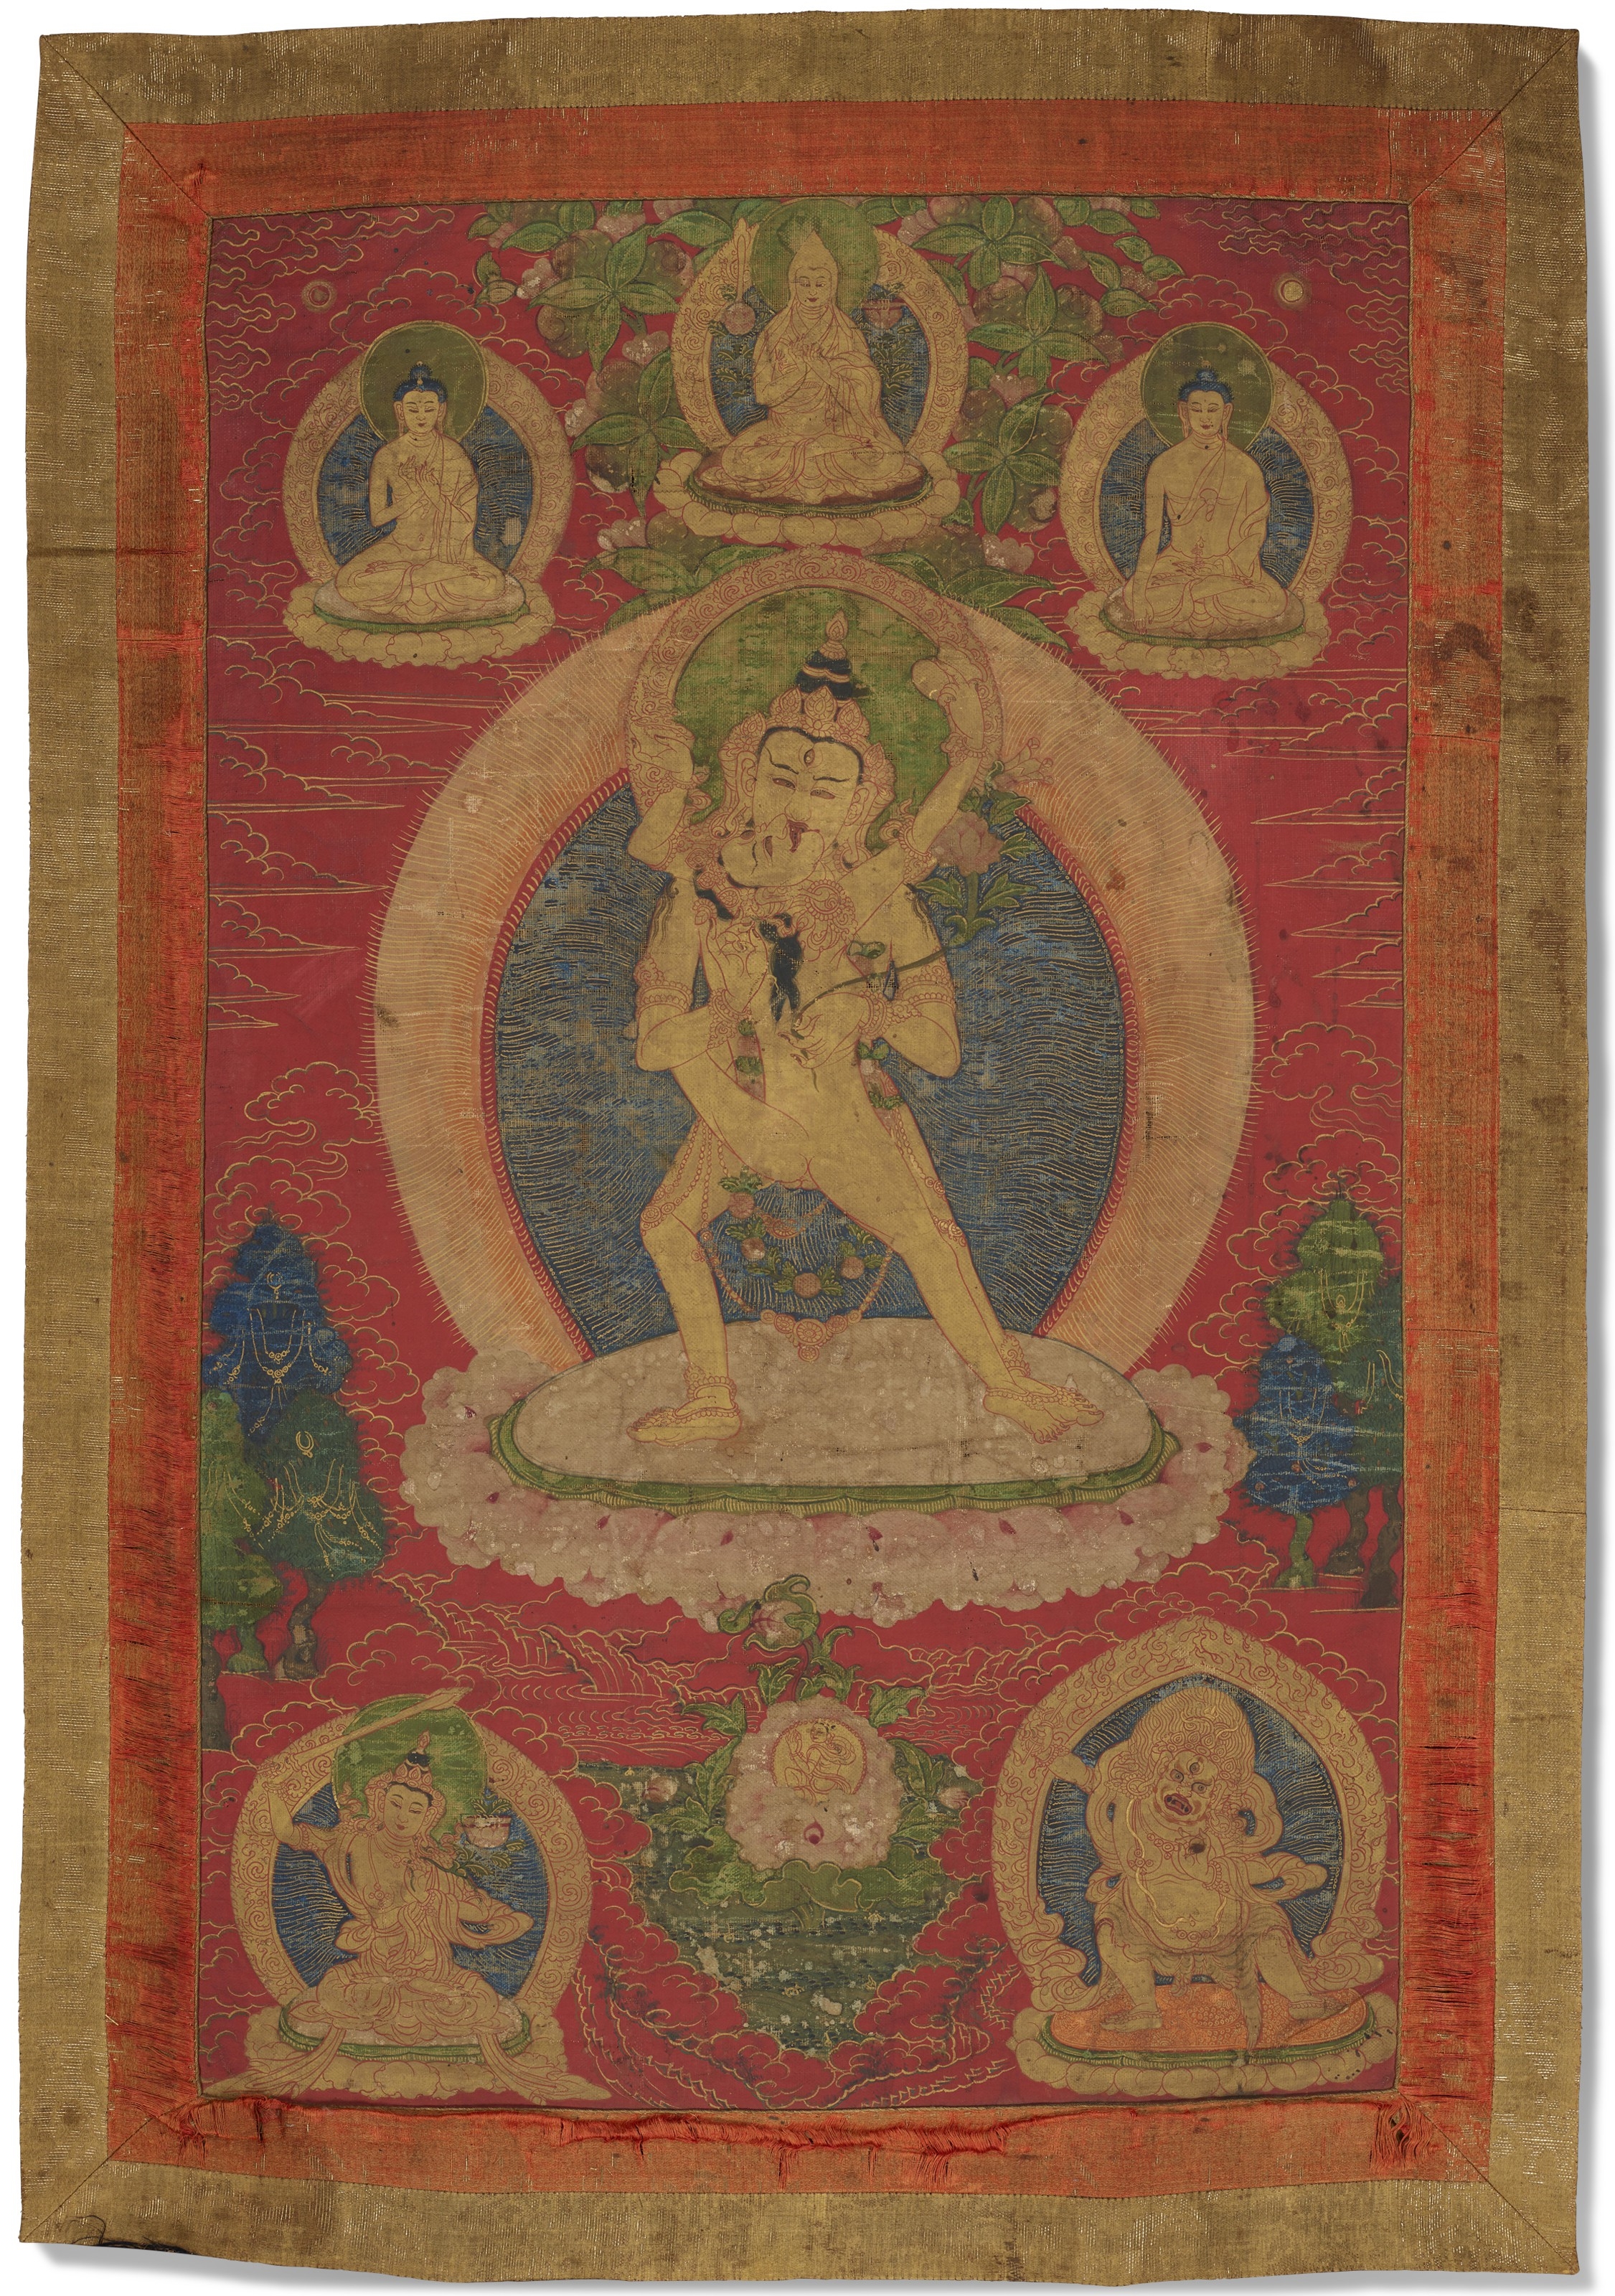 A PAINTING OF CHAKRASAMVARA AND VAJRAVARAHI by Tibetan School, 18th Century